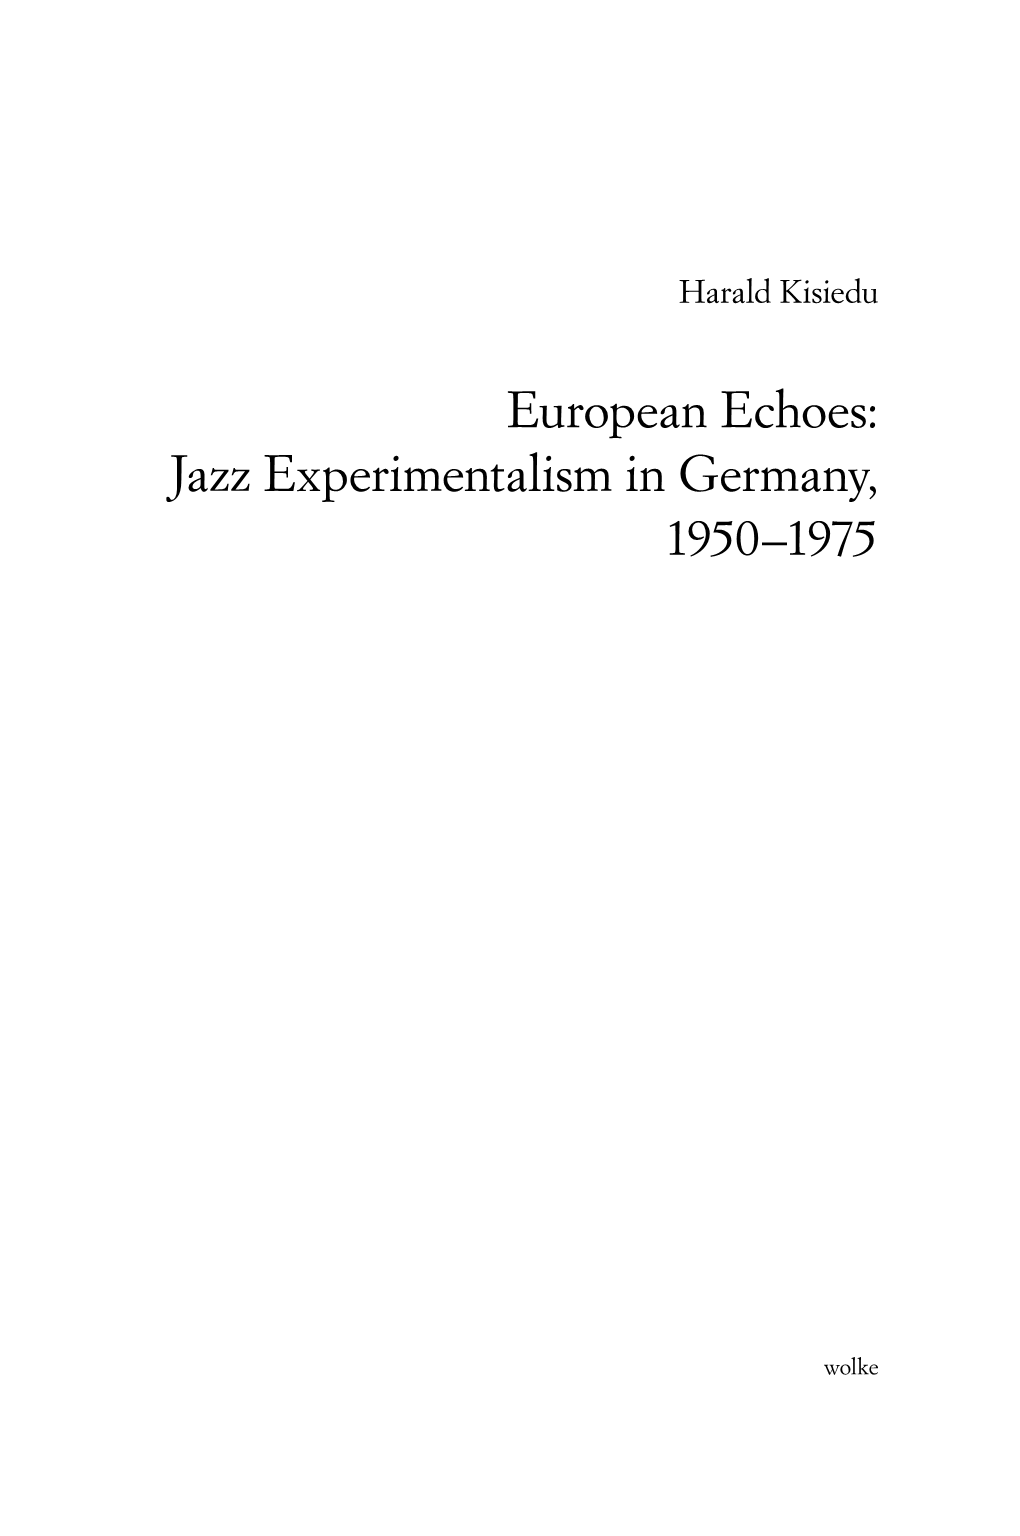 Jazz Experimentalism in Germany, 1950–1975